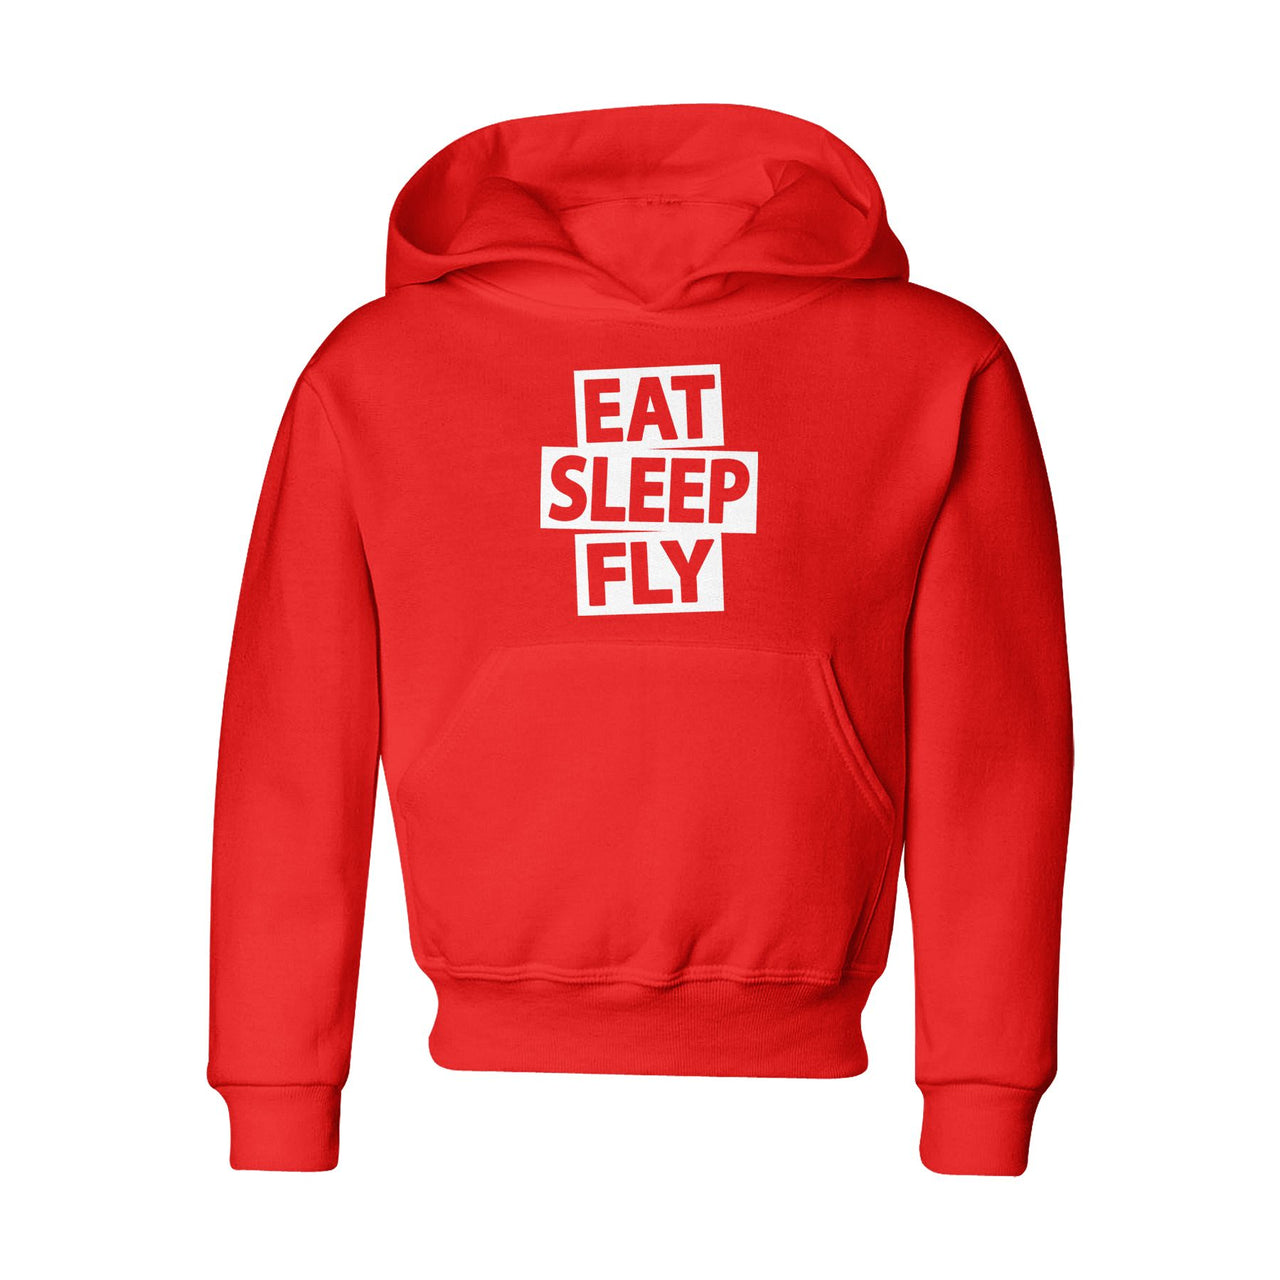 Eat Sleep Fly Designed "CHILDREN" Hoodies